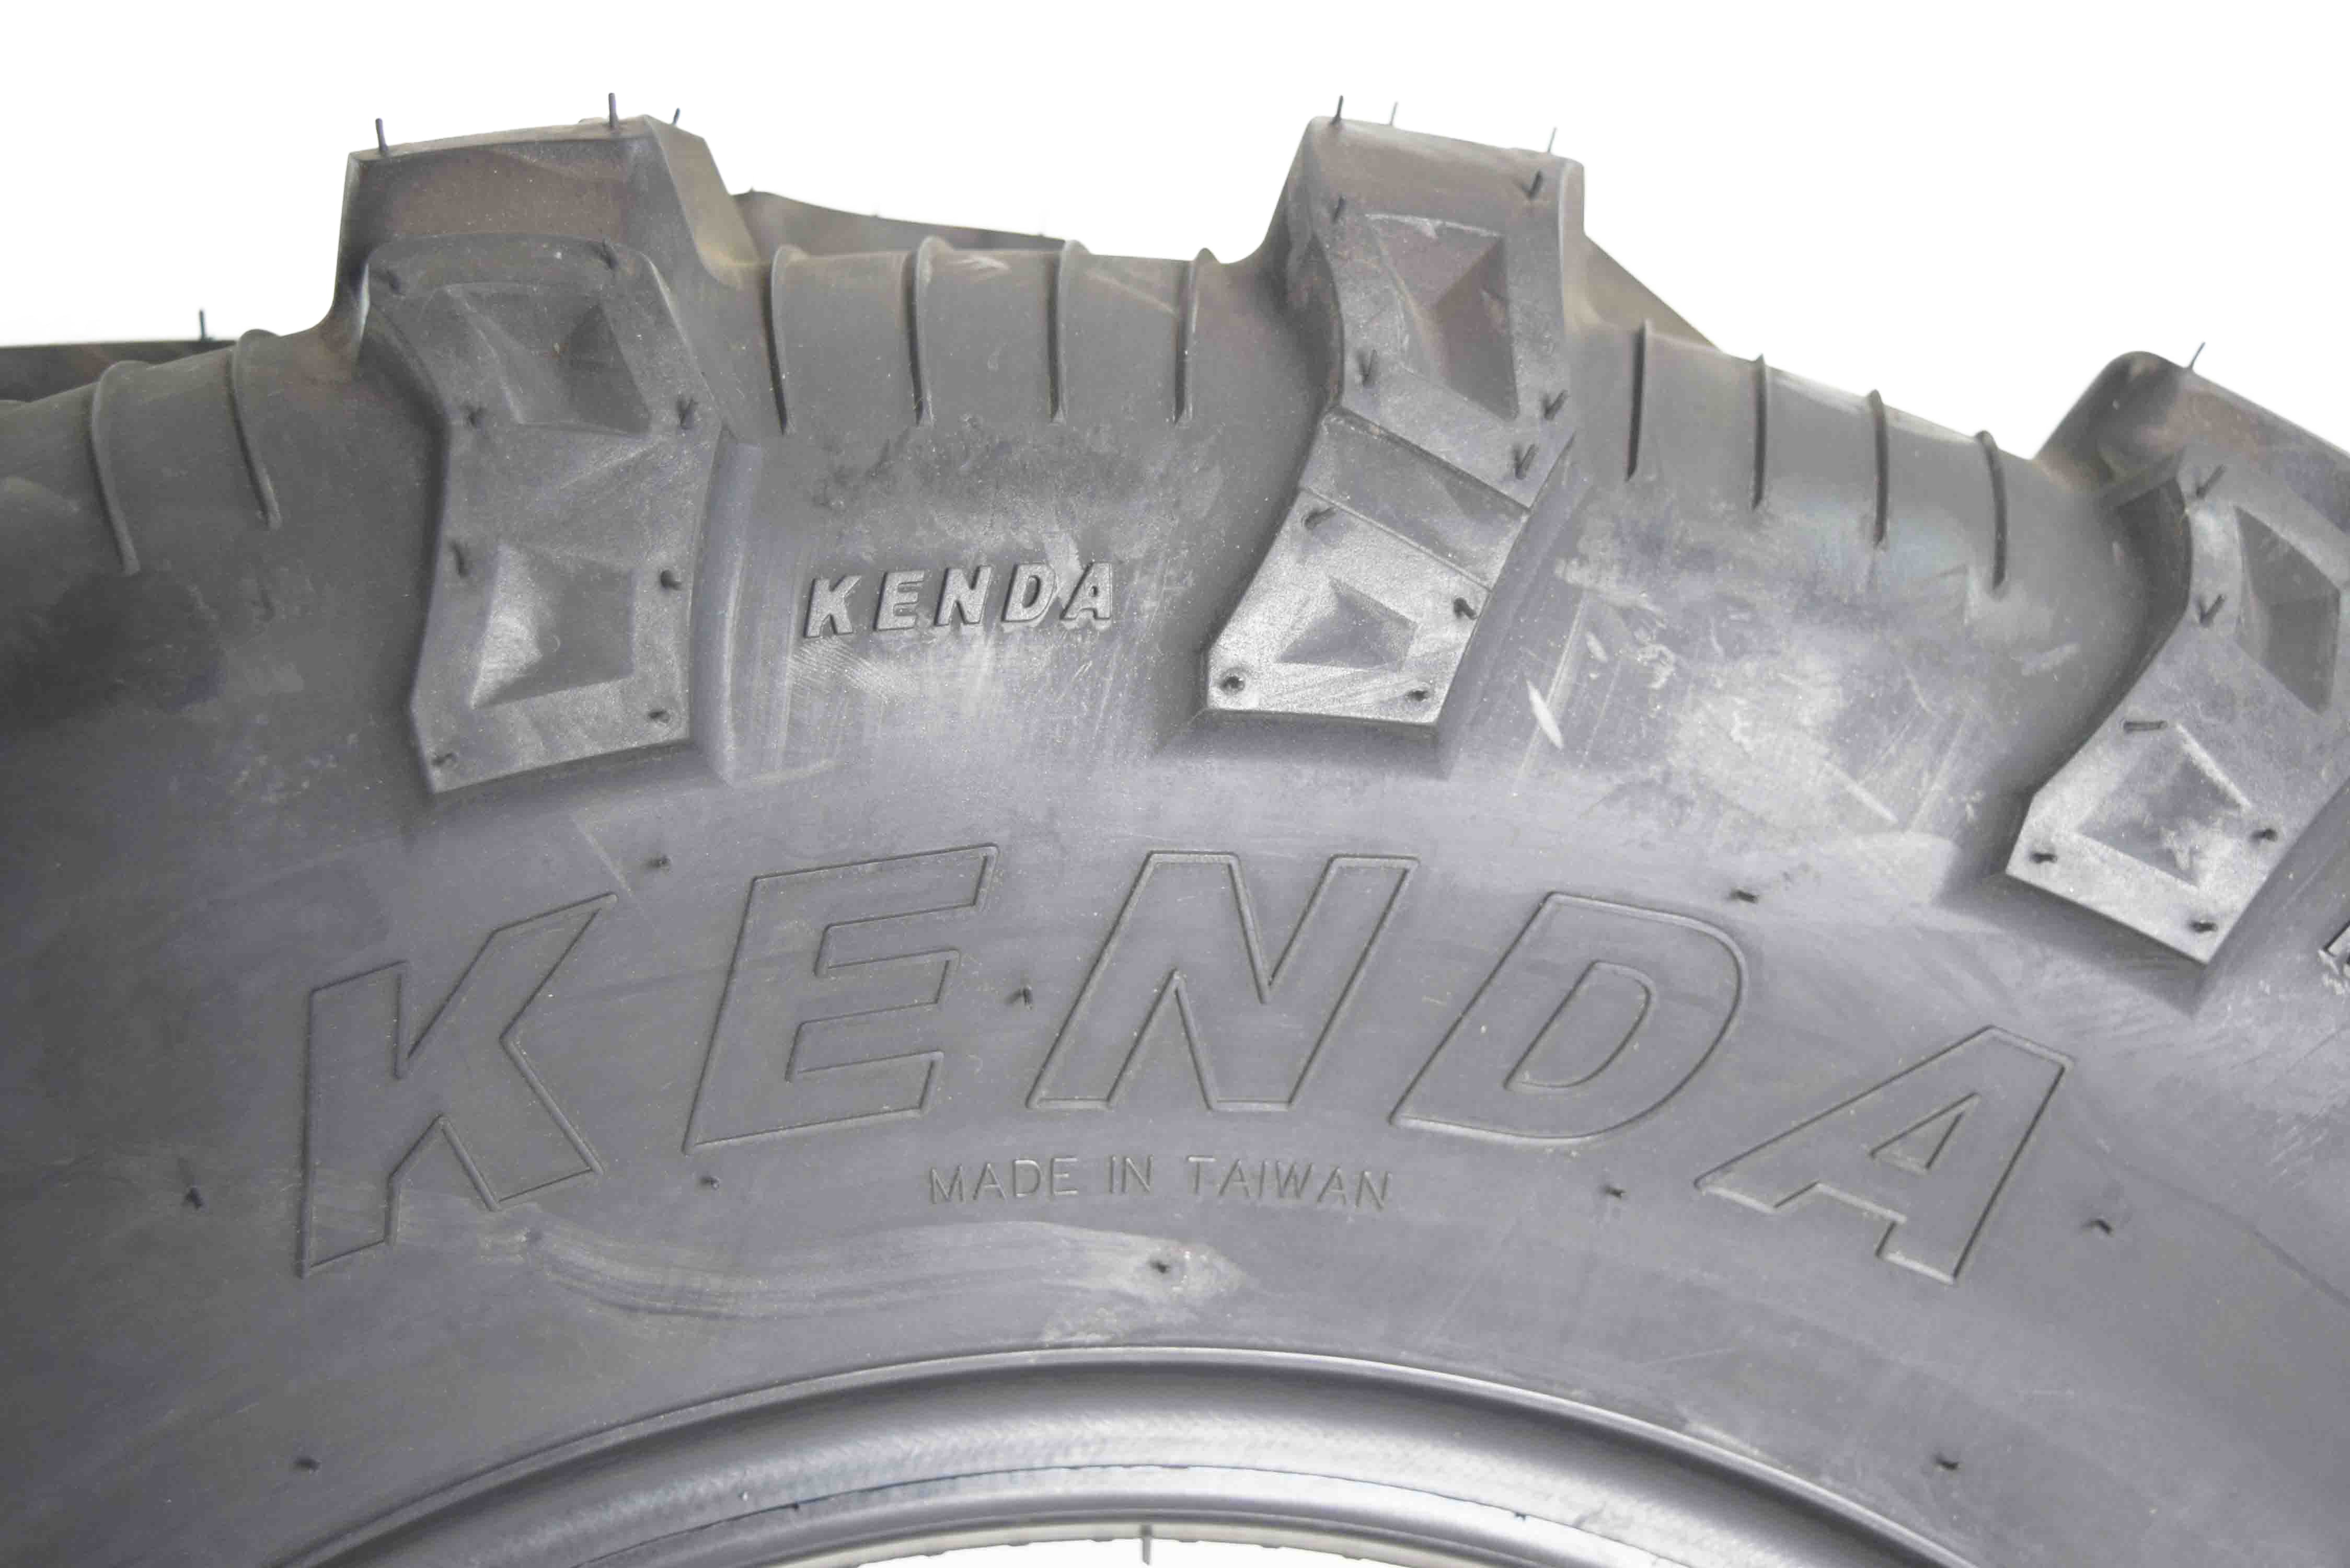 Kenda Bear Claw EVO 28x9-14 Front & 28x11-14 Rear ATV/UTV Tires Set with Bottle Opener Keychain